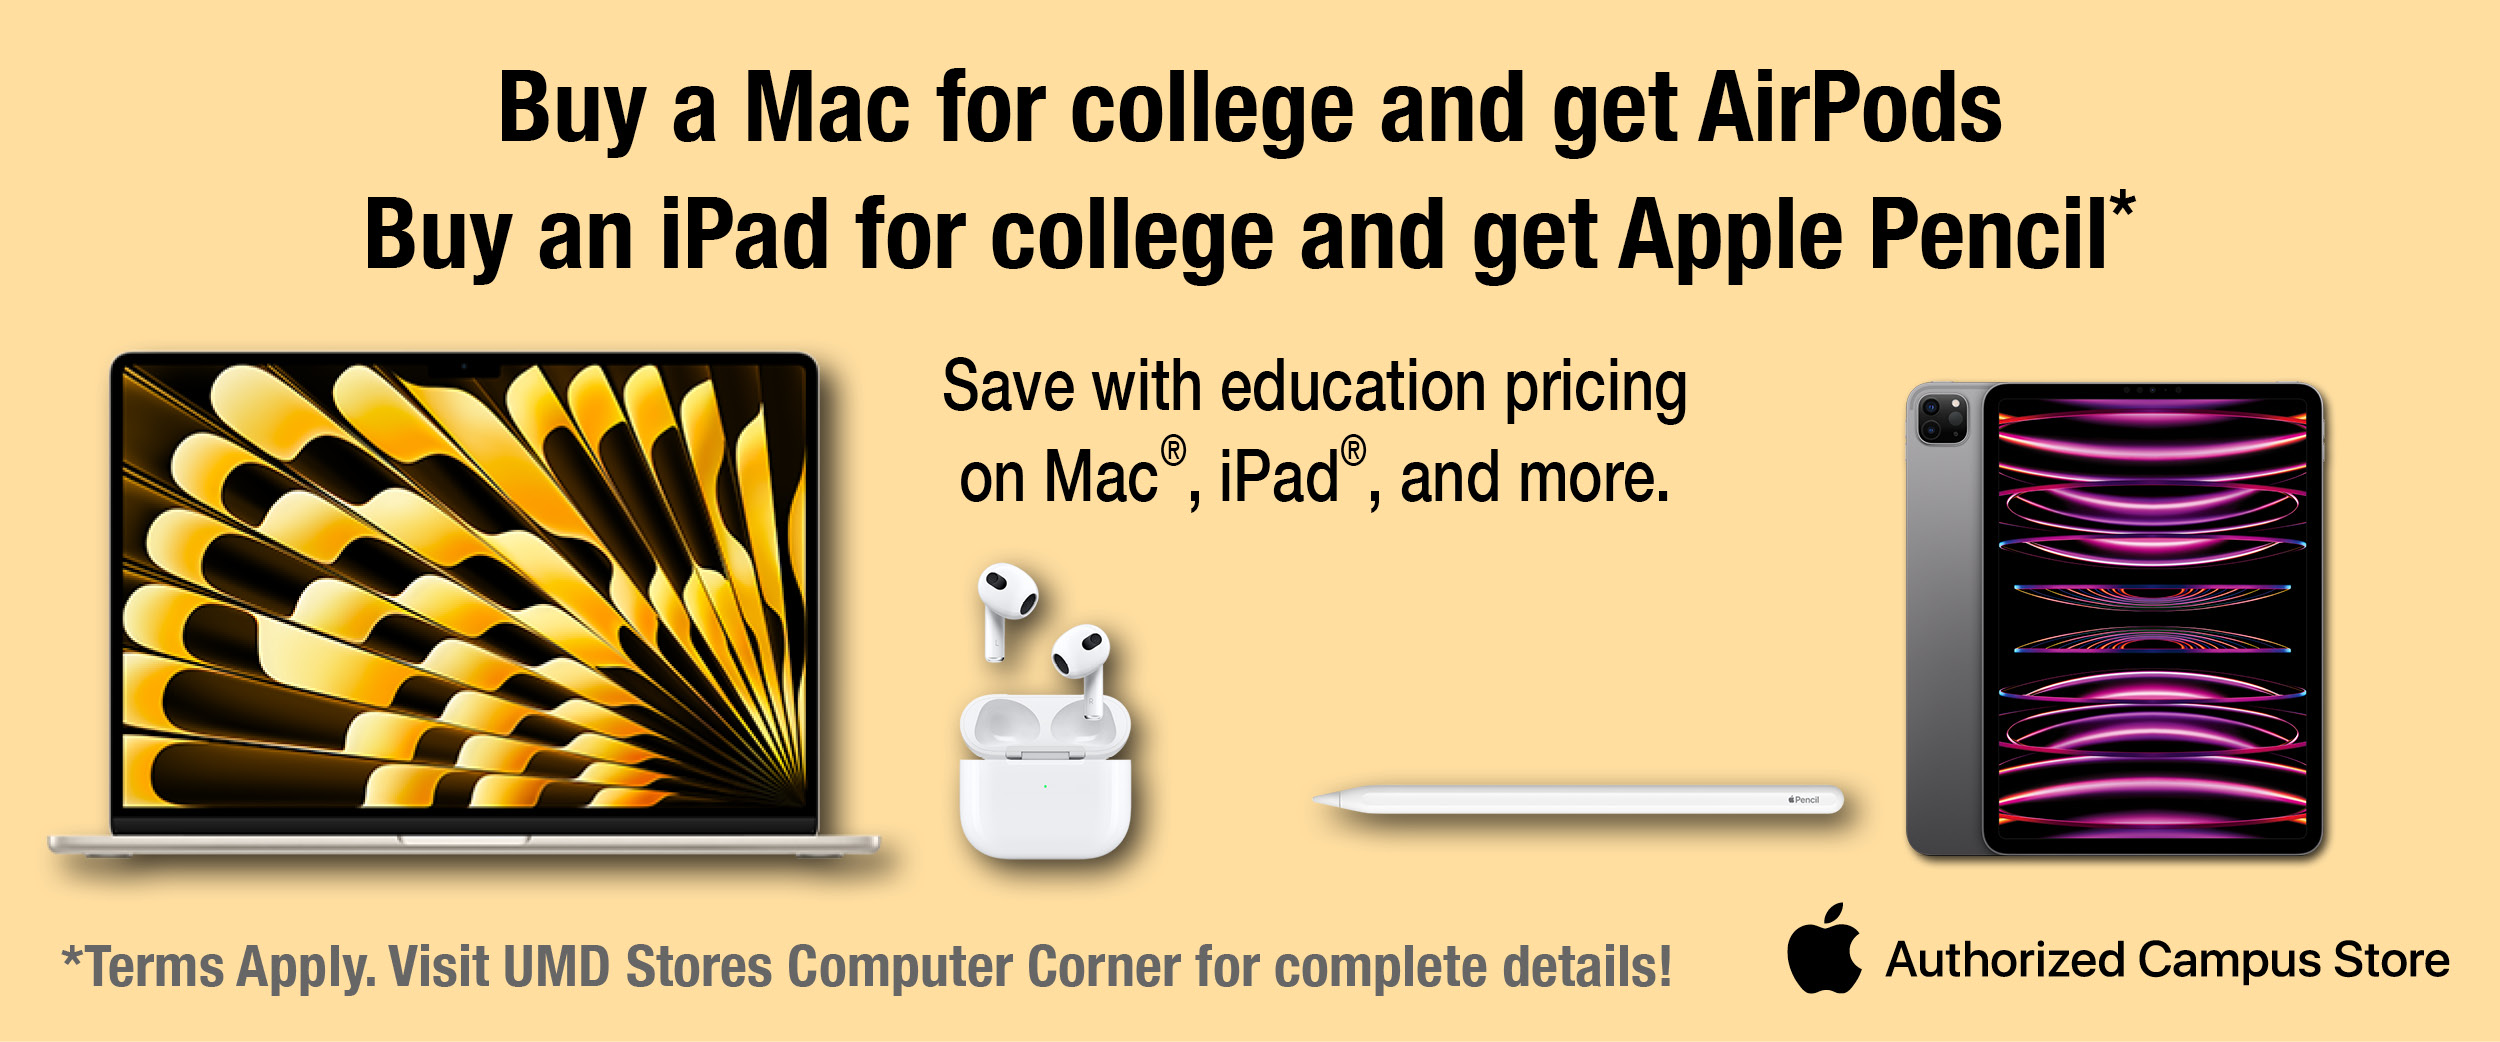 Buy a Mac Get AirPods